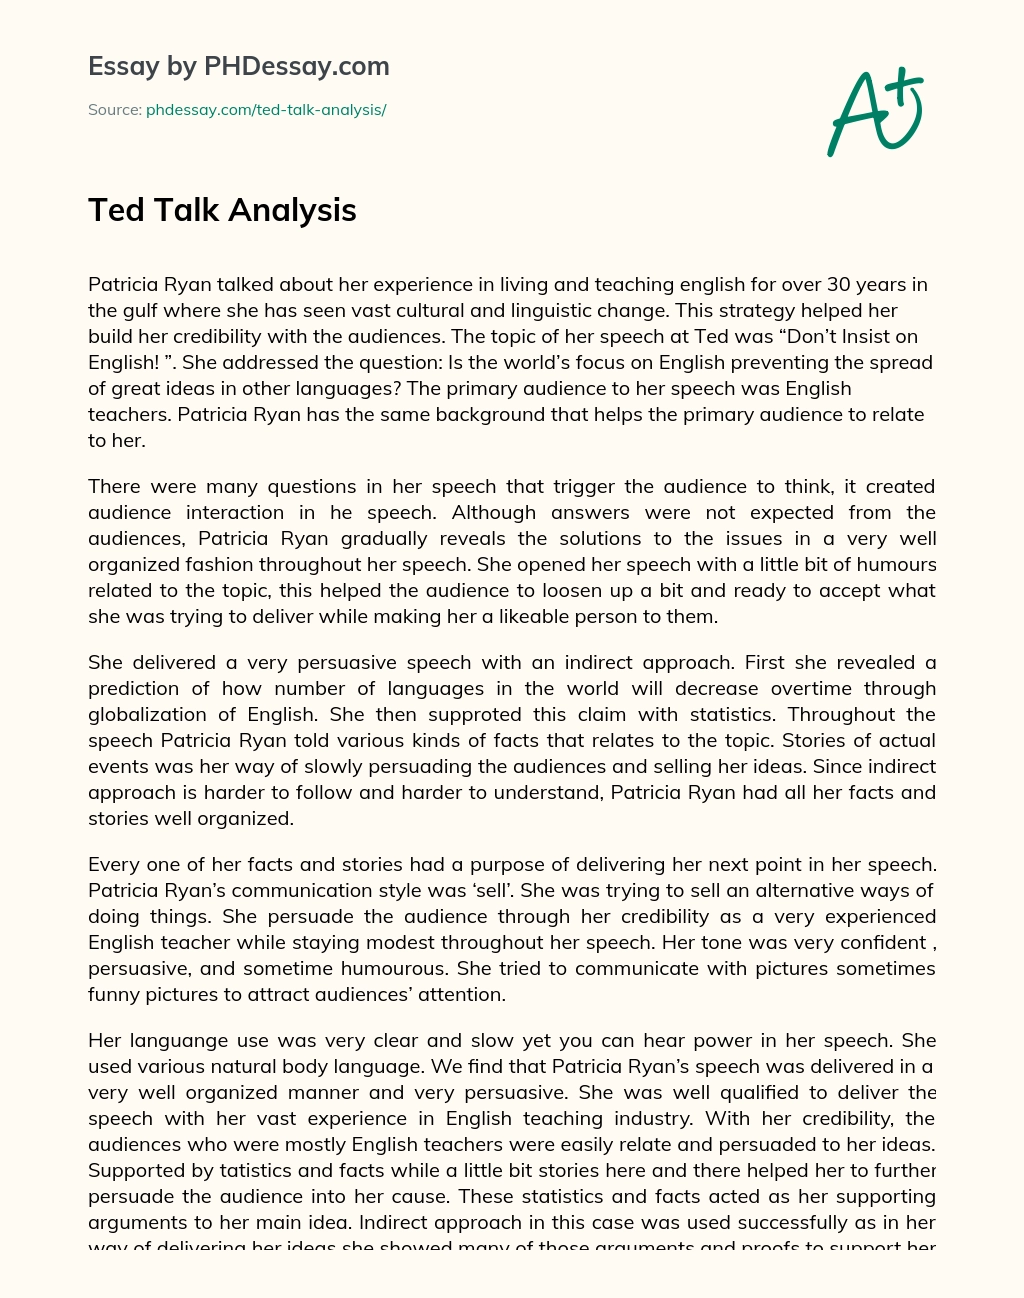 Ted Talk Analysis essay